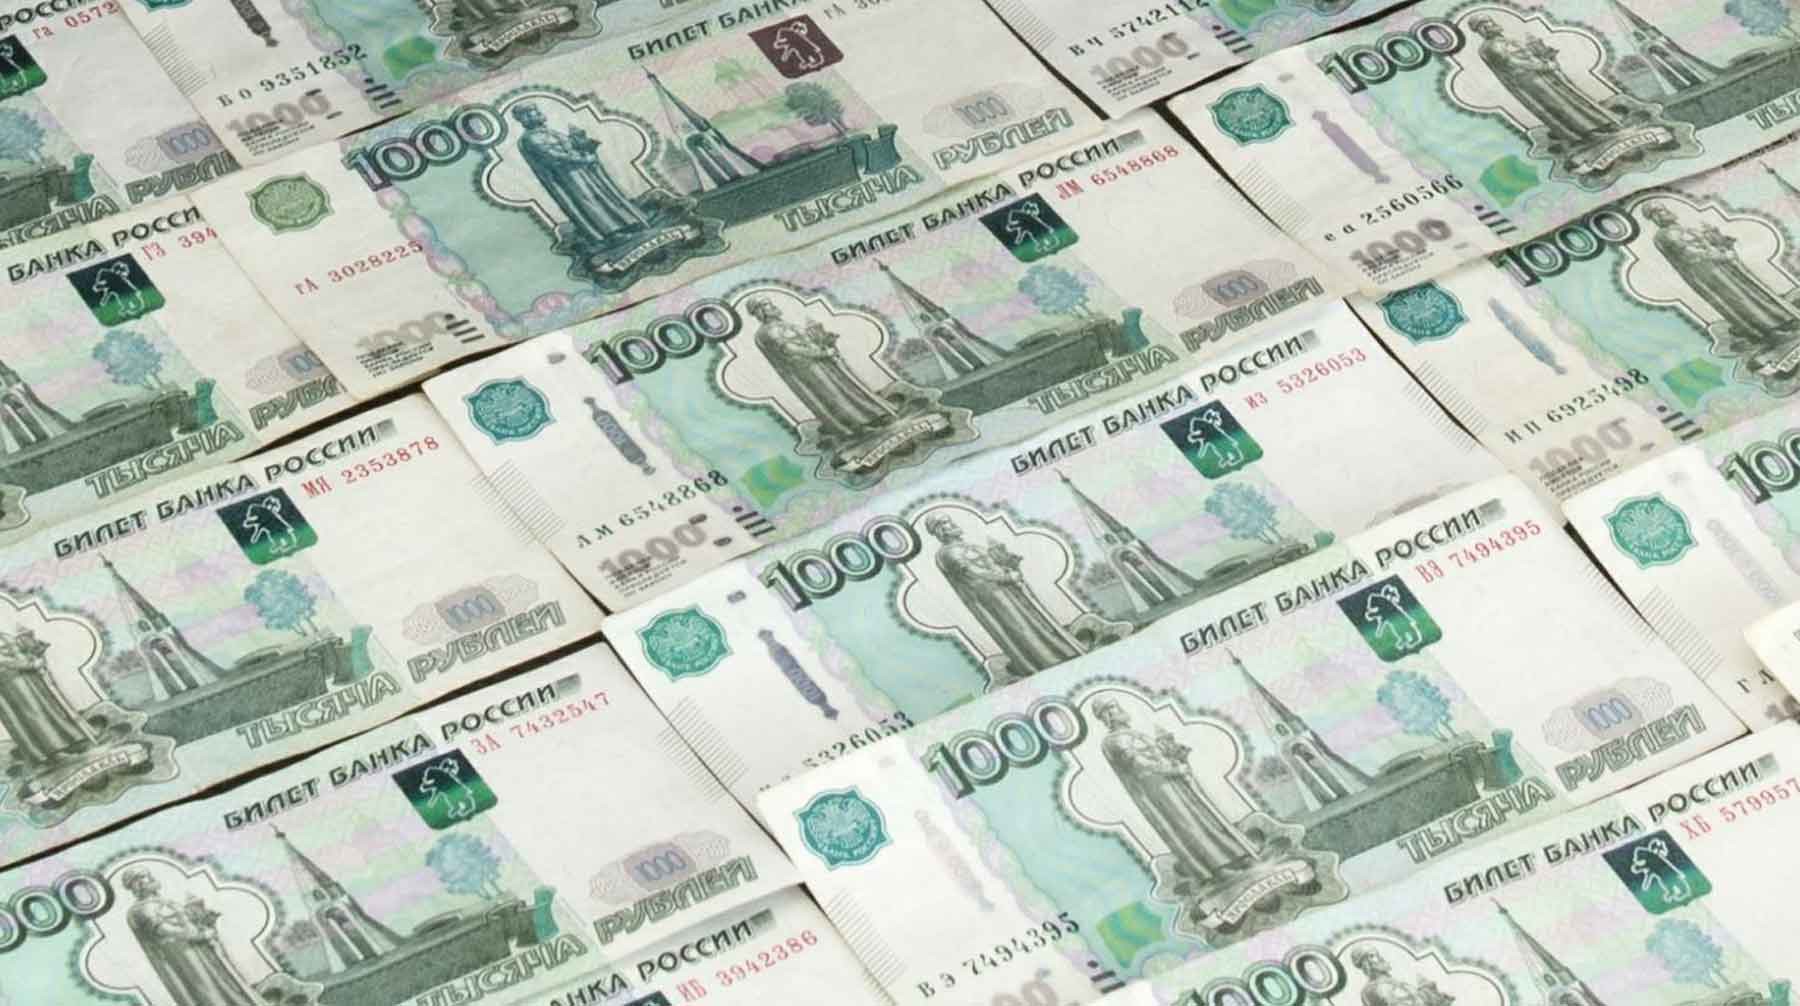 350 млрд в рублях